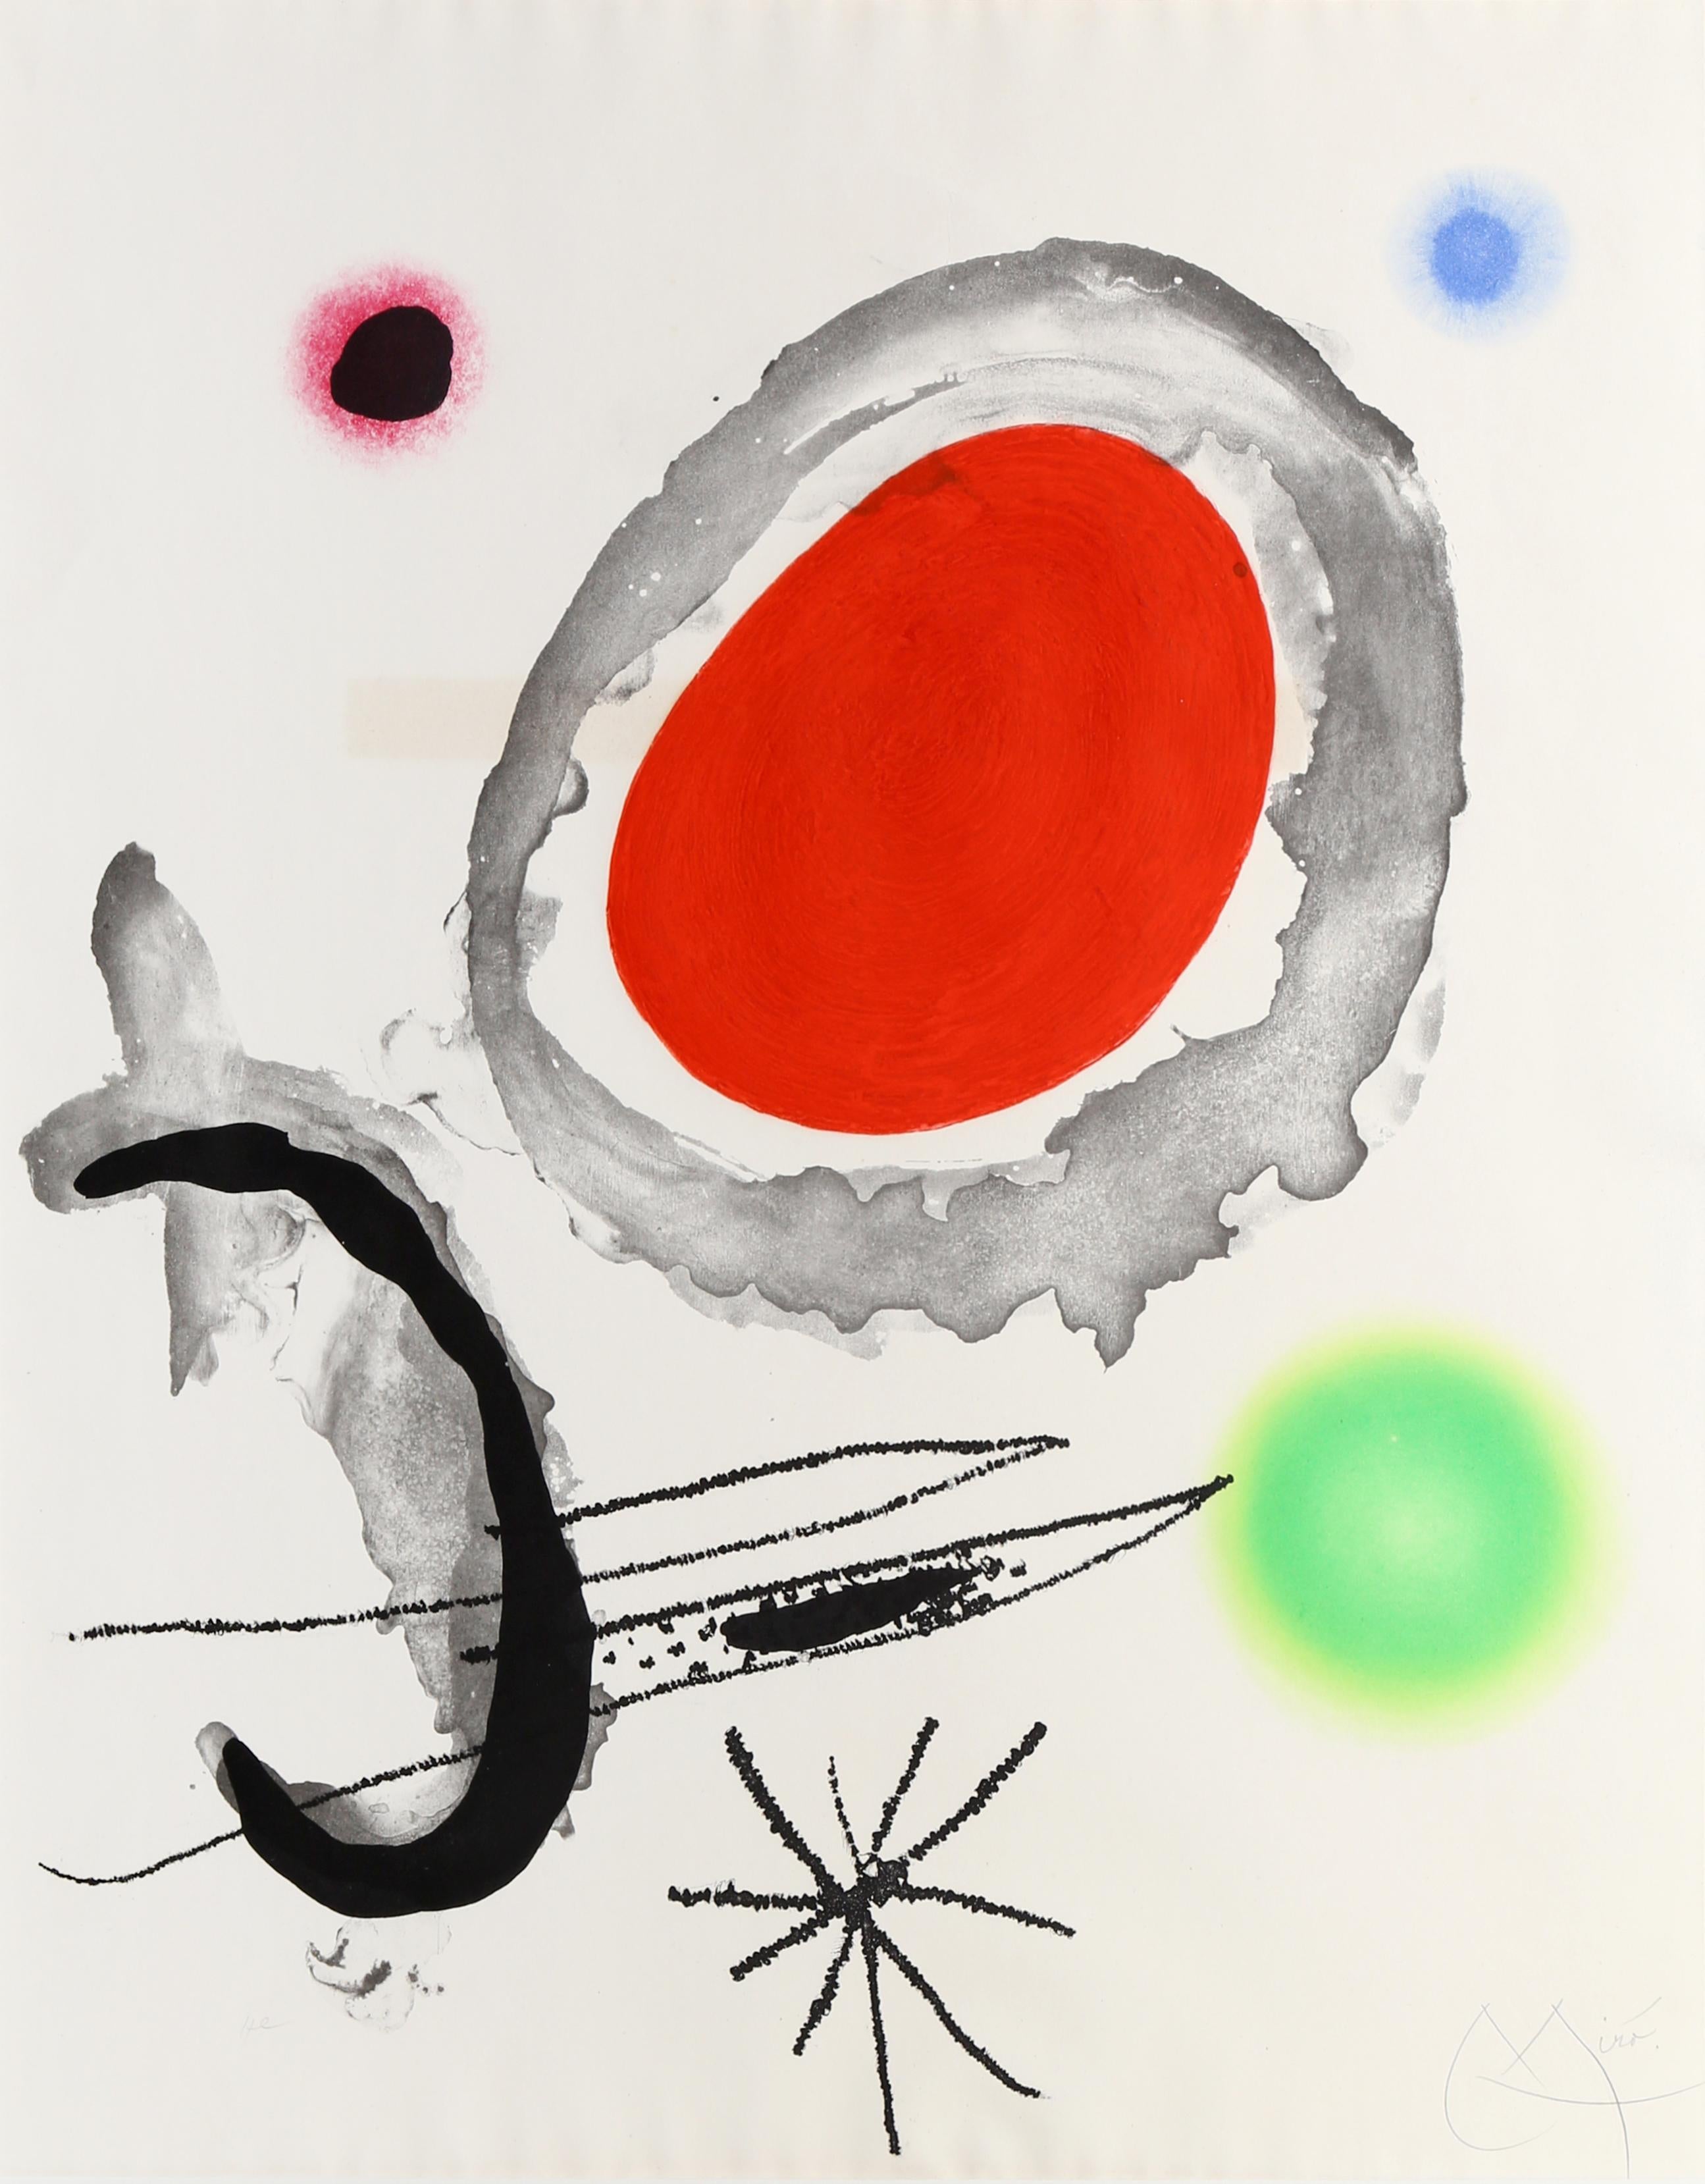 Oiseau Entre deux Astres, gerahmte Radierung von Joan Miro, 1967 (Grau), Abstract Print, von Joan Miró